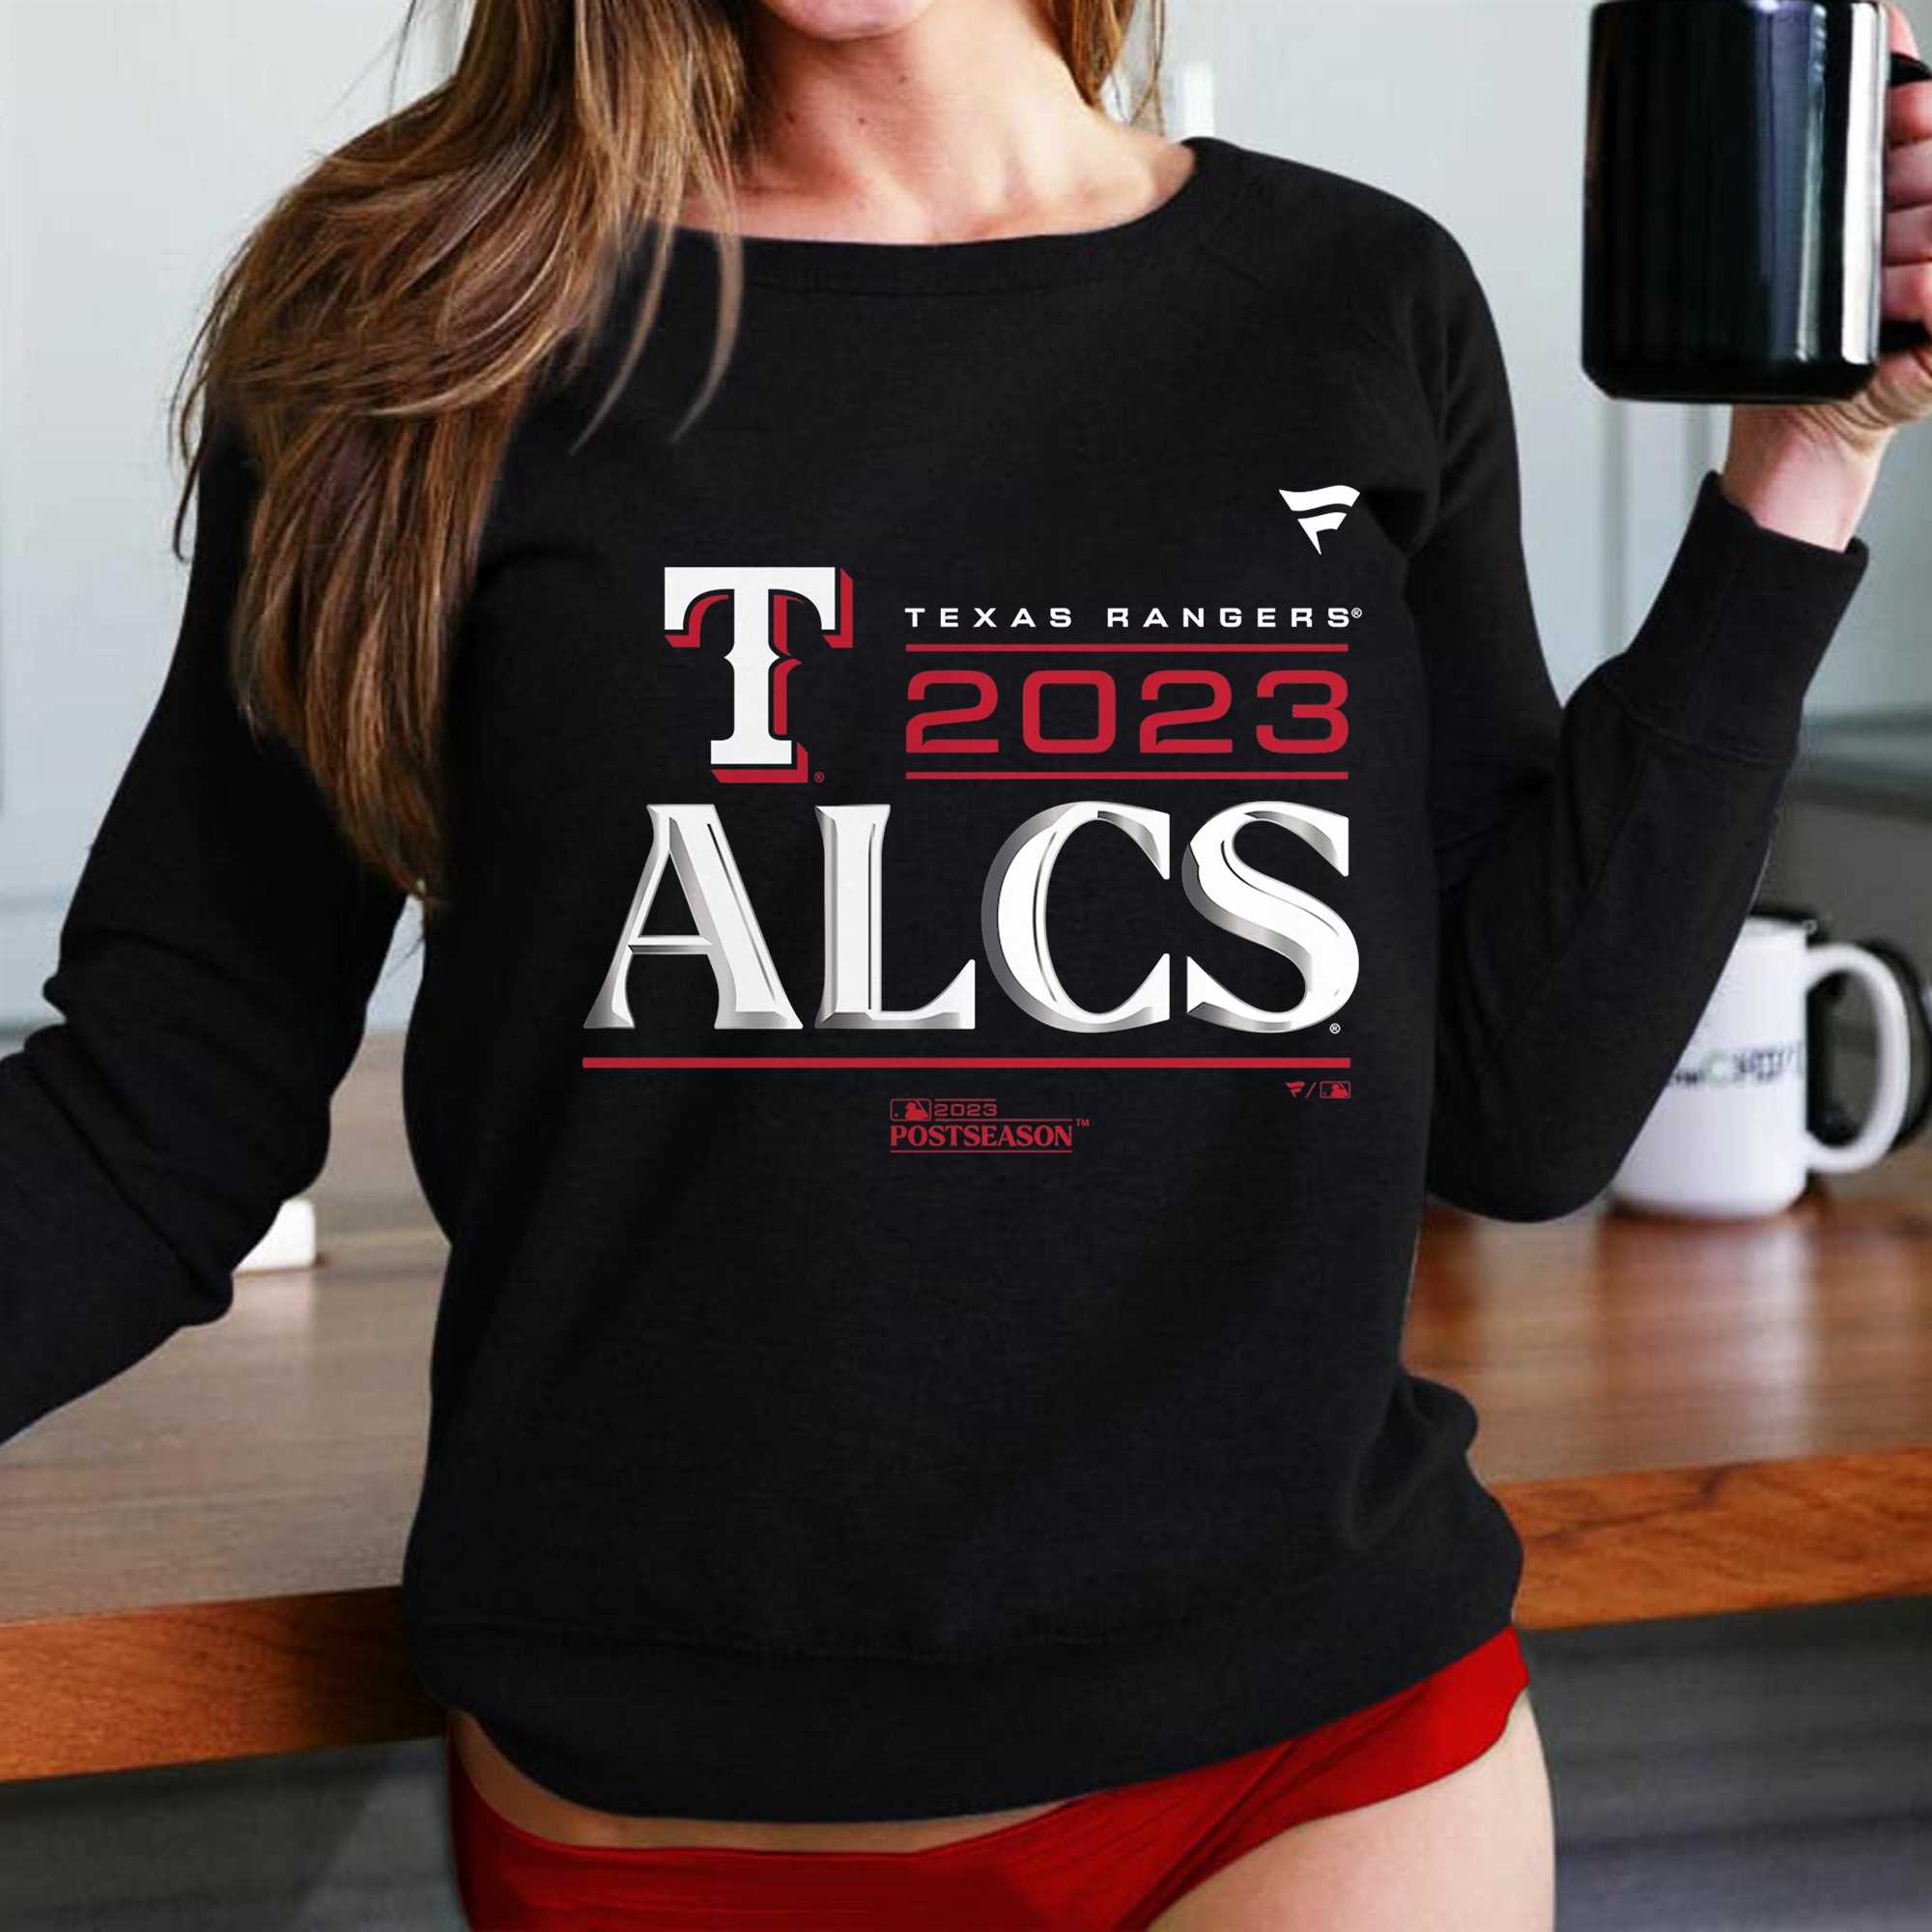 Women's Fanatics Branded Royal Texas Rangers One Champion V-Neck T-Shirt Size: Medium